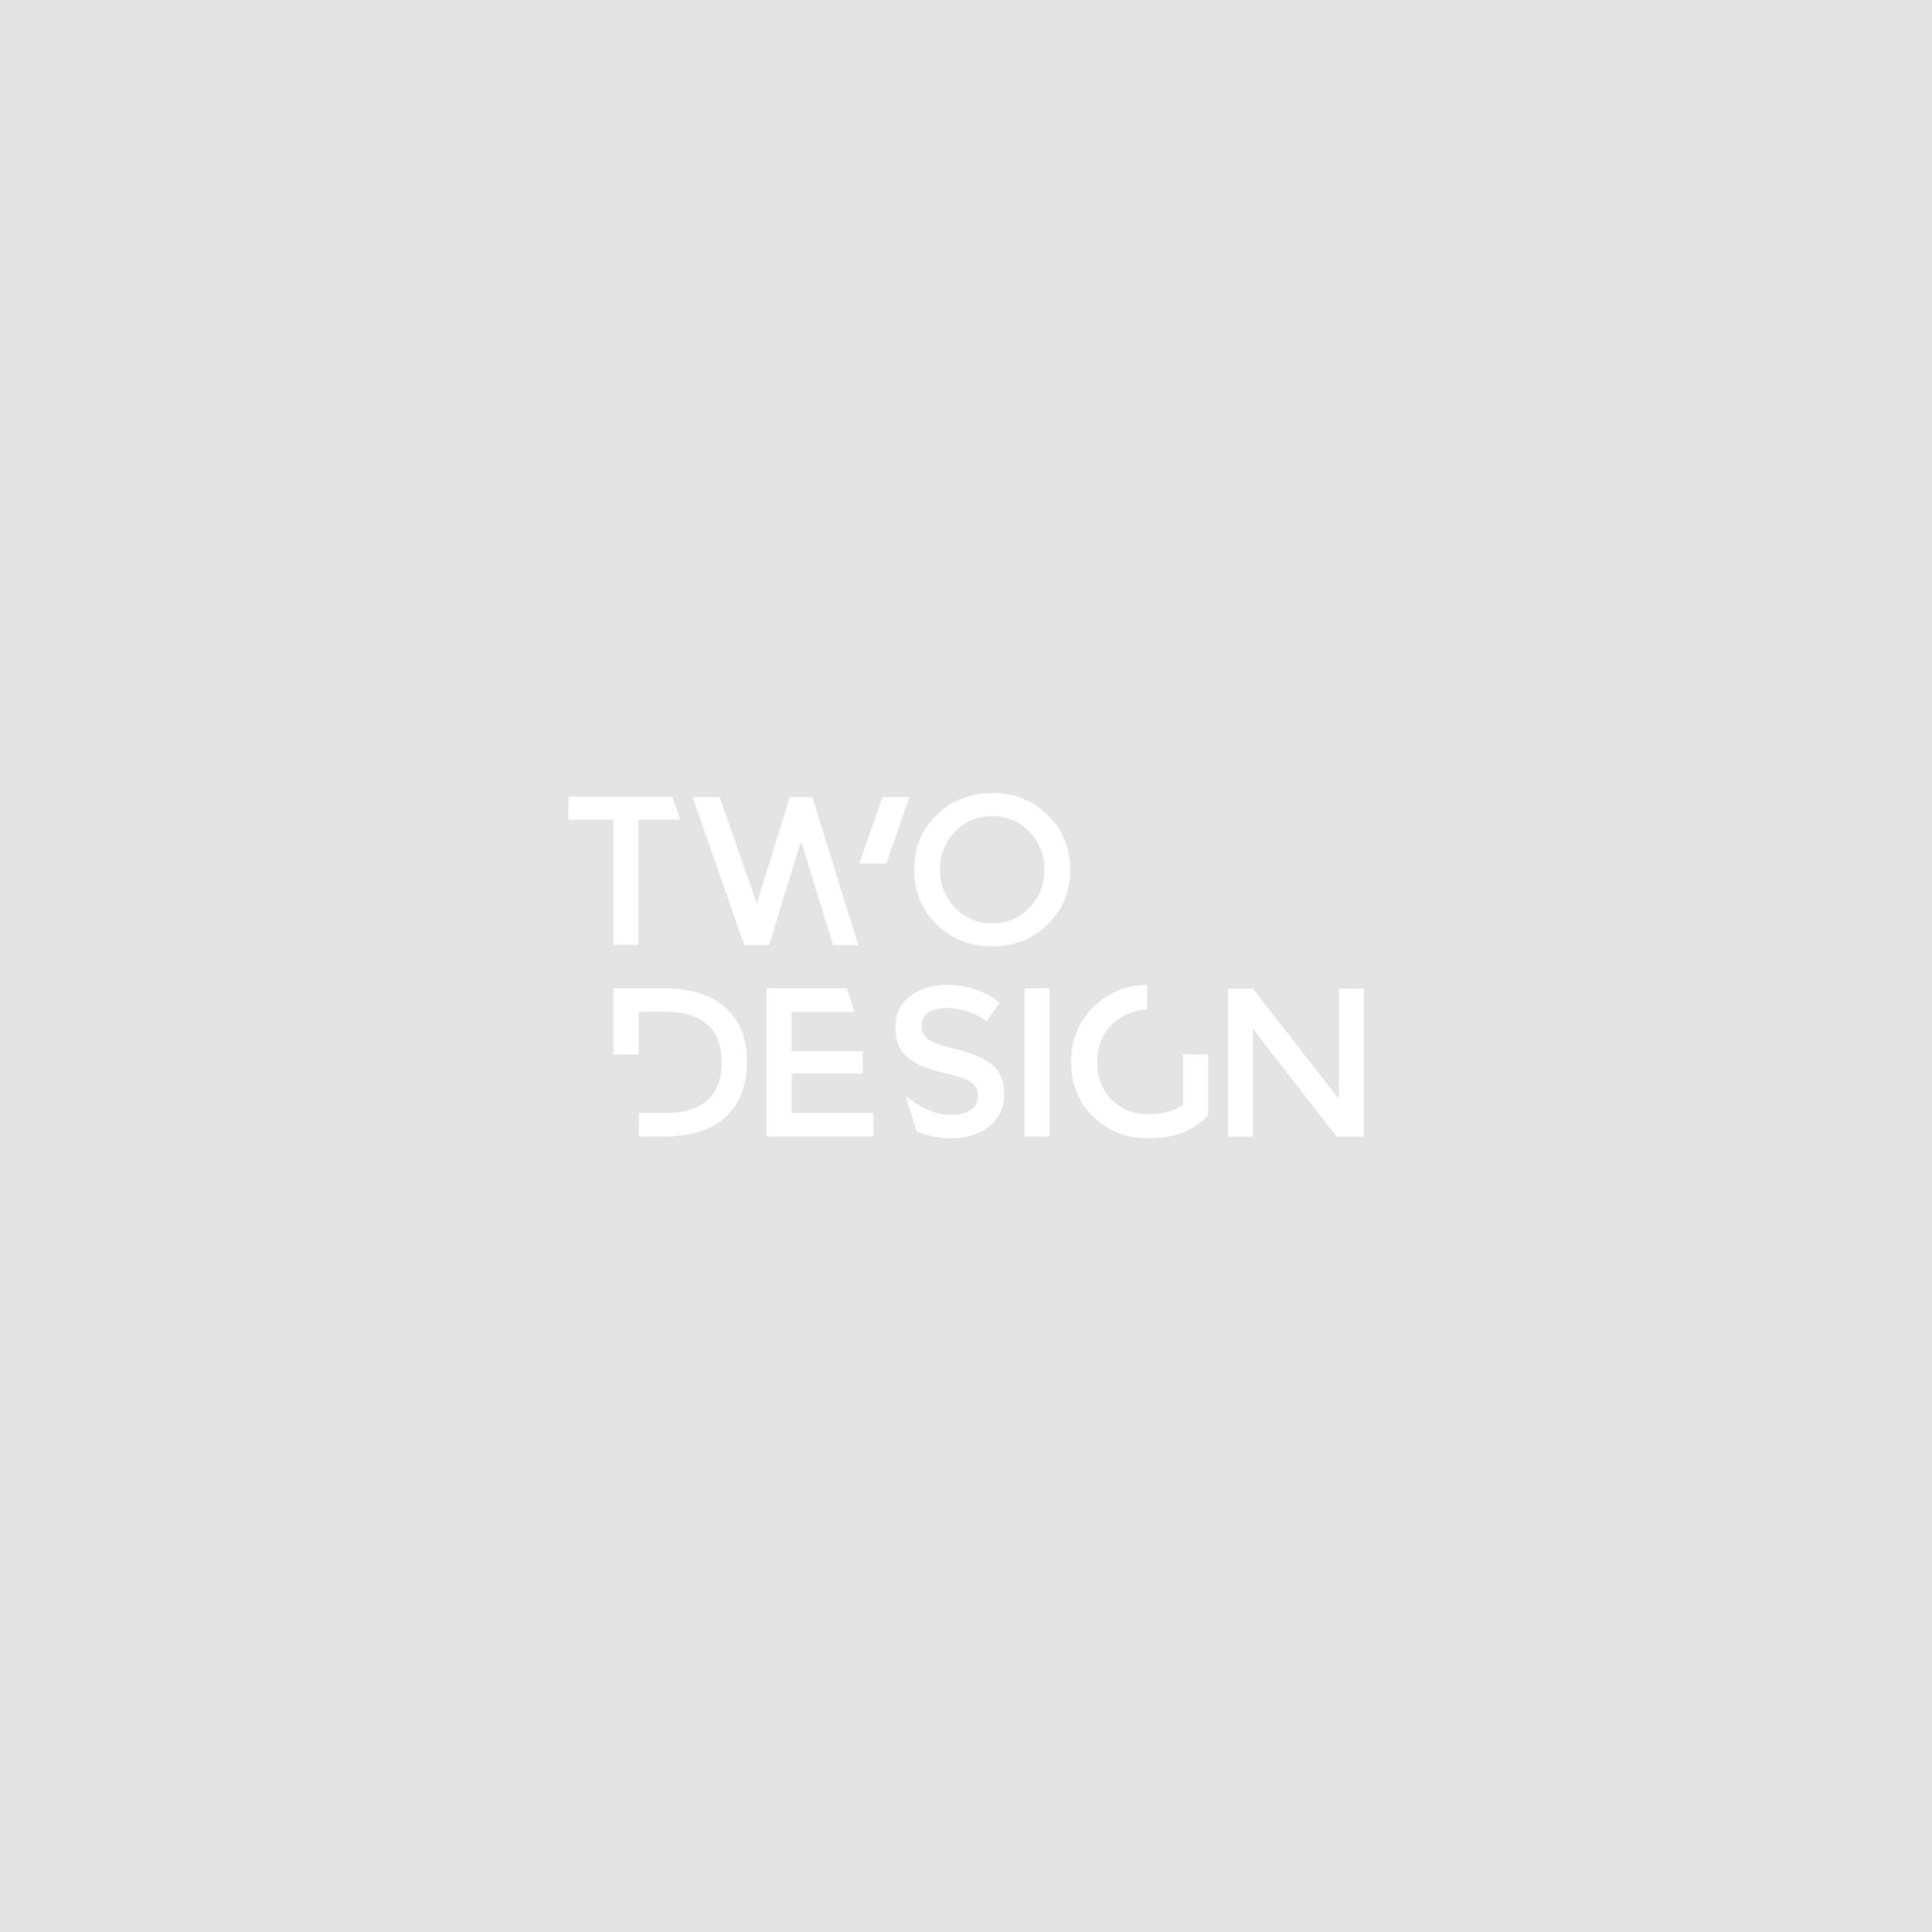 Two_design_placeholder.jpg